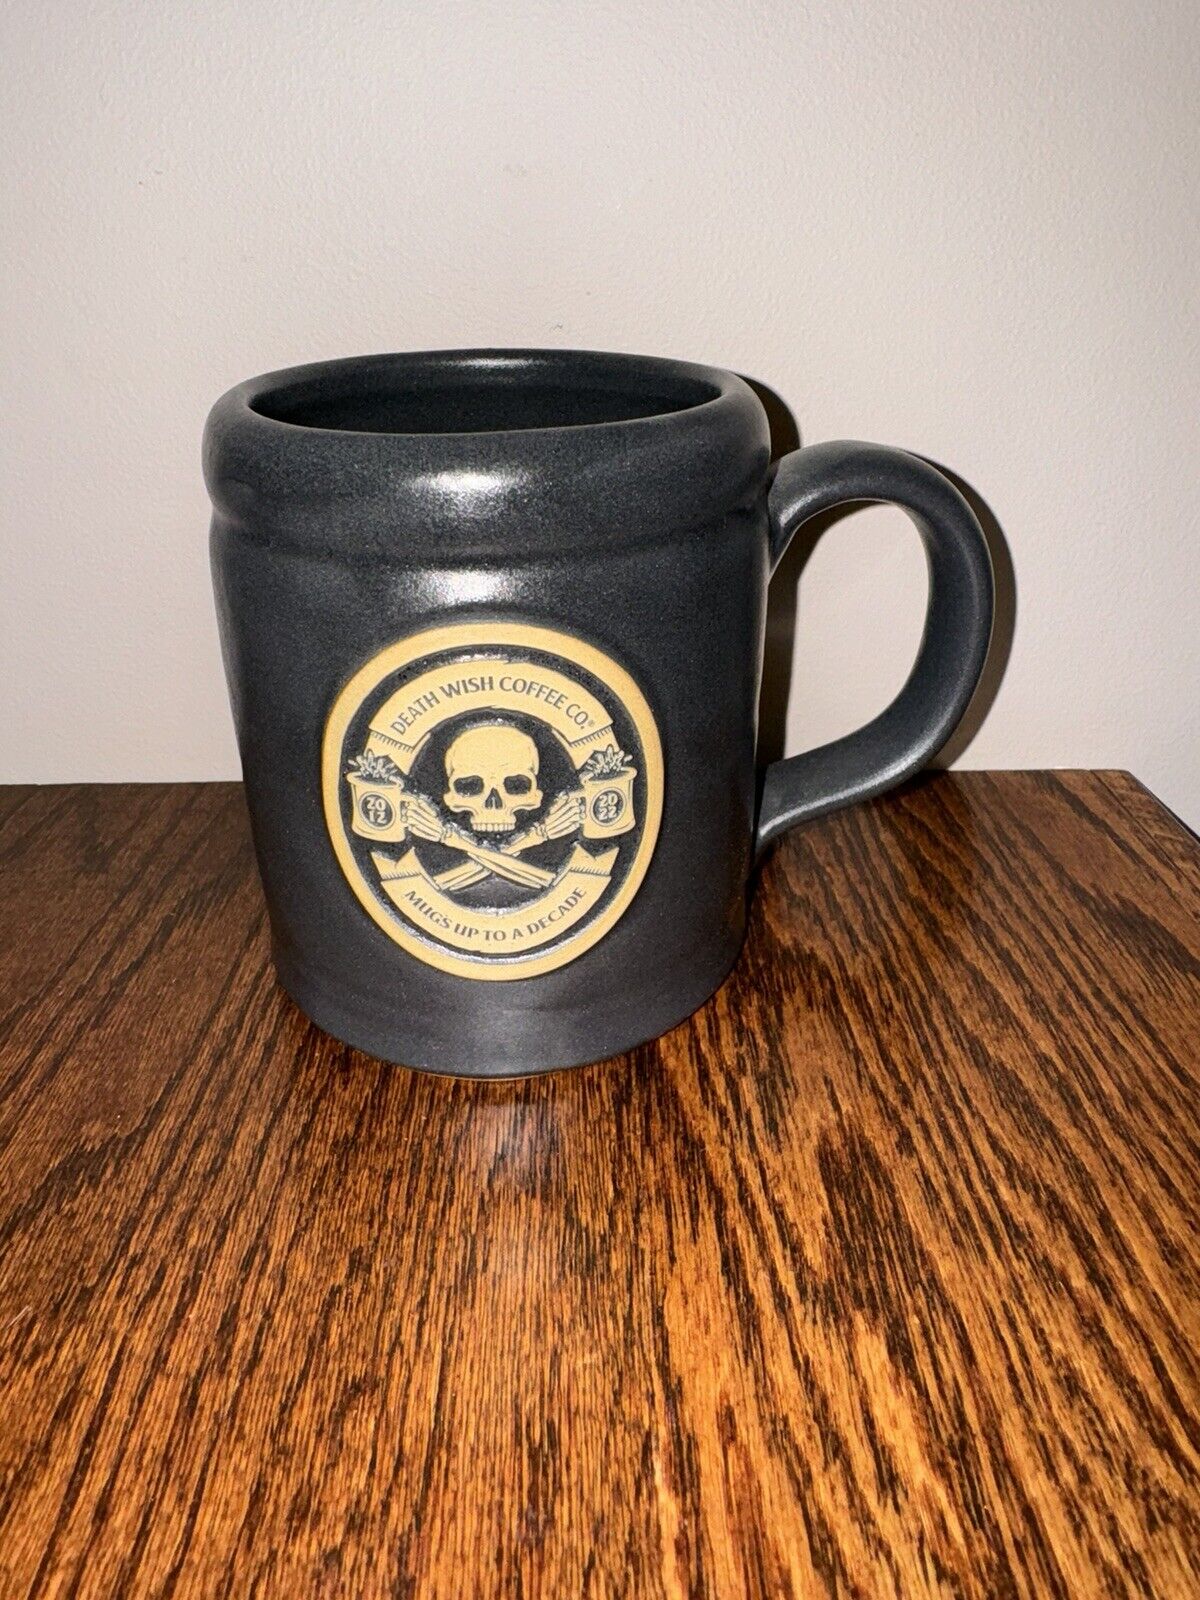 Death Wish Coffee 10 Year Anniversary Mug #3003/3050 Mugs Up To A Decade Deneen